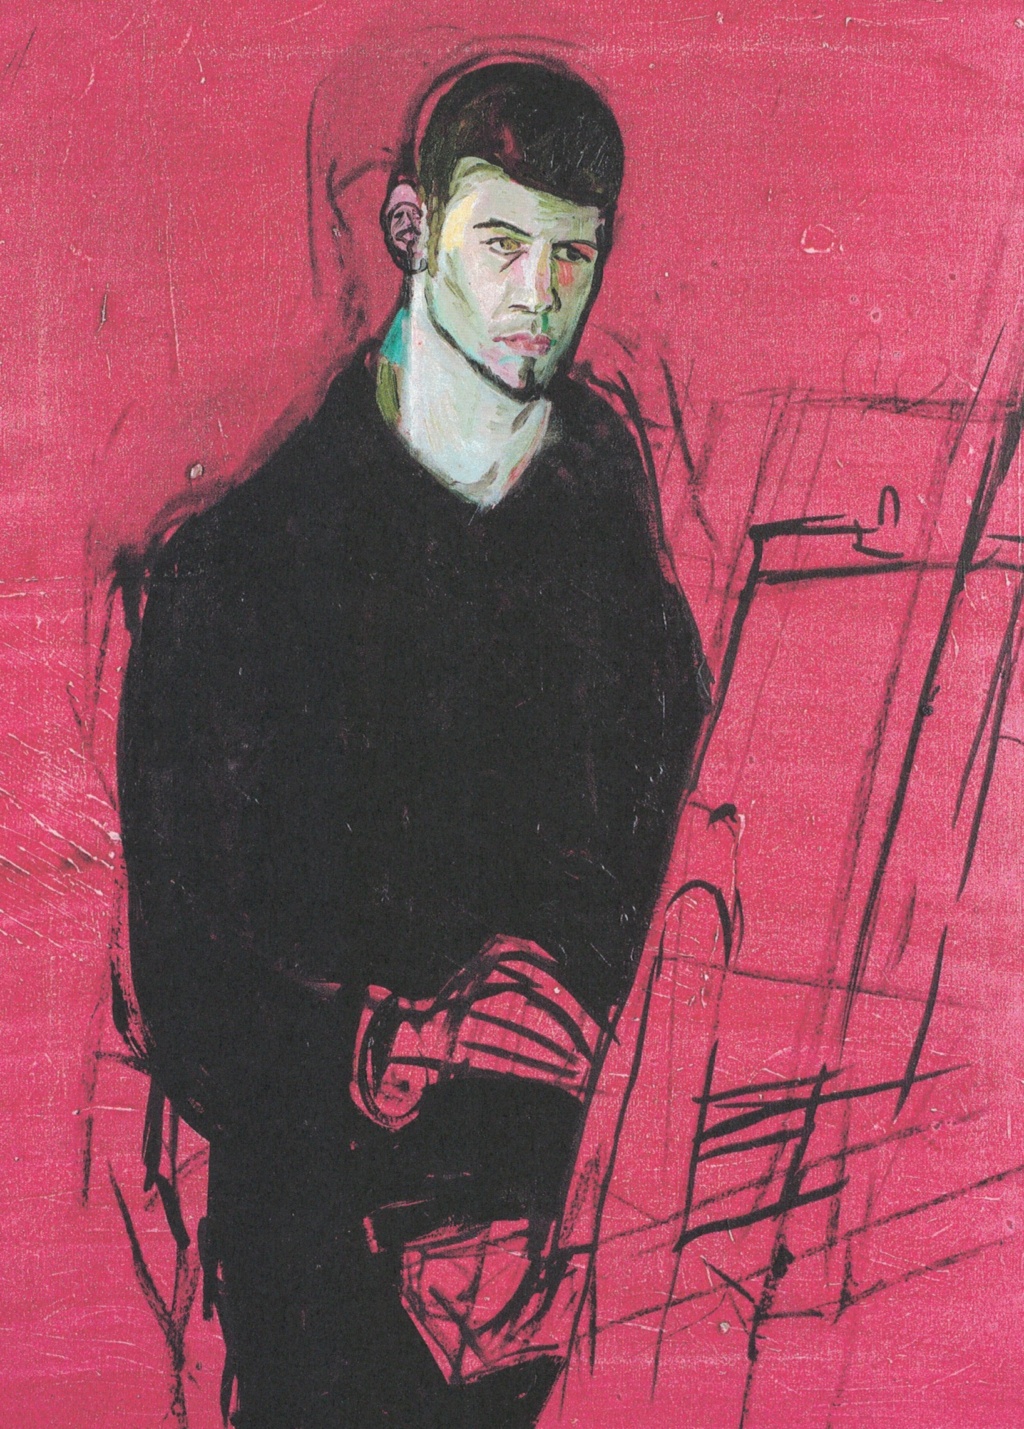 Balz Baechi, A.H. malt sich selbst, 1998
Oil on canvas
80 x 50 cm
